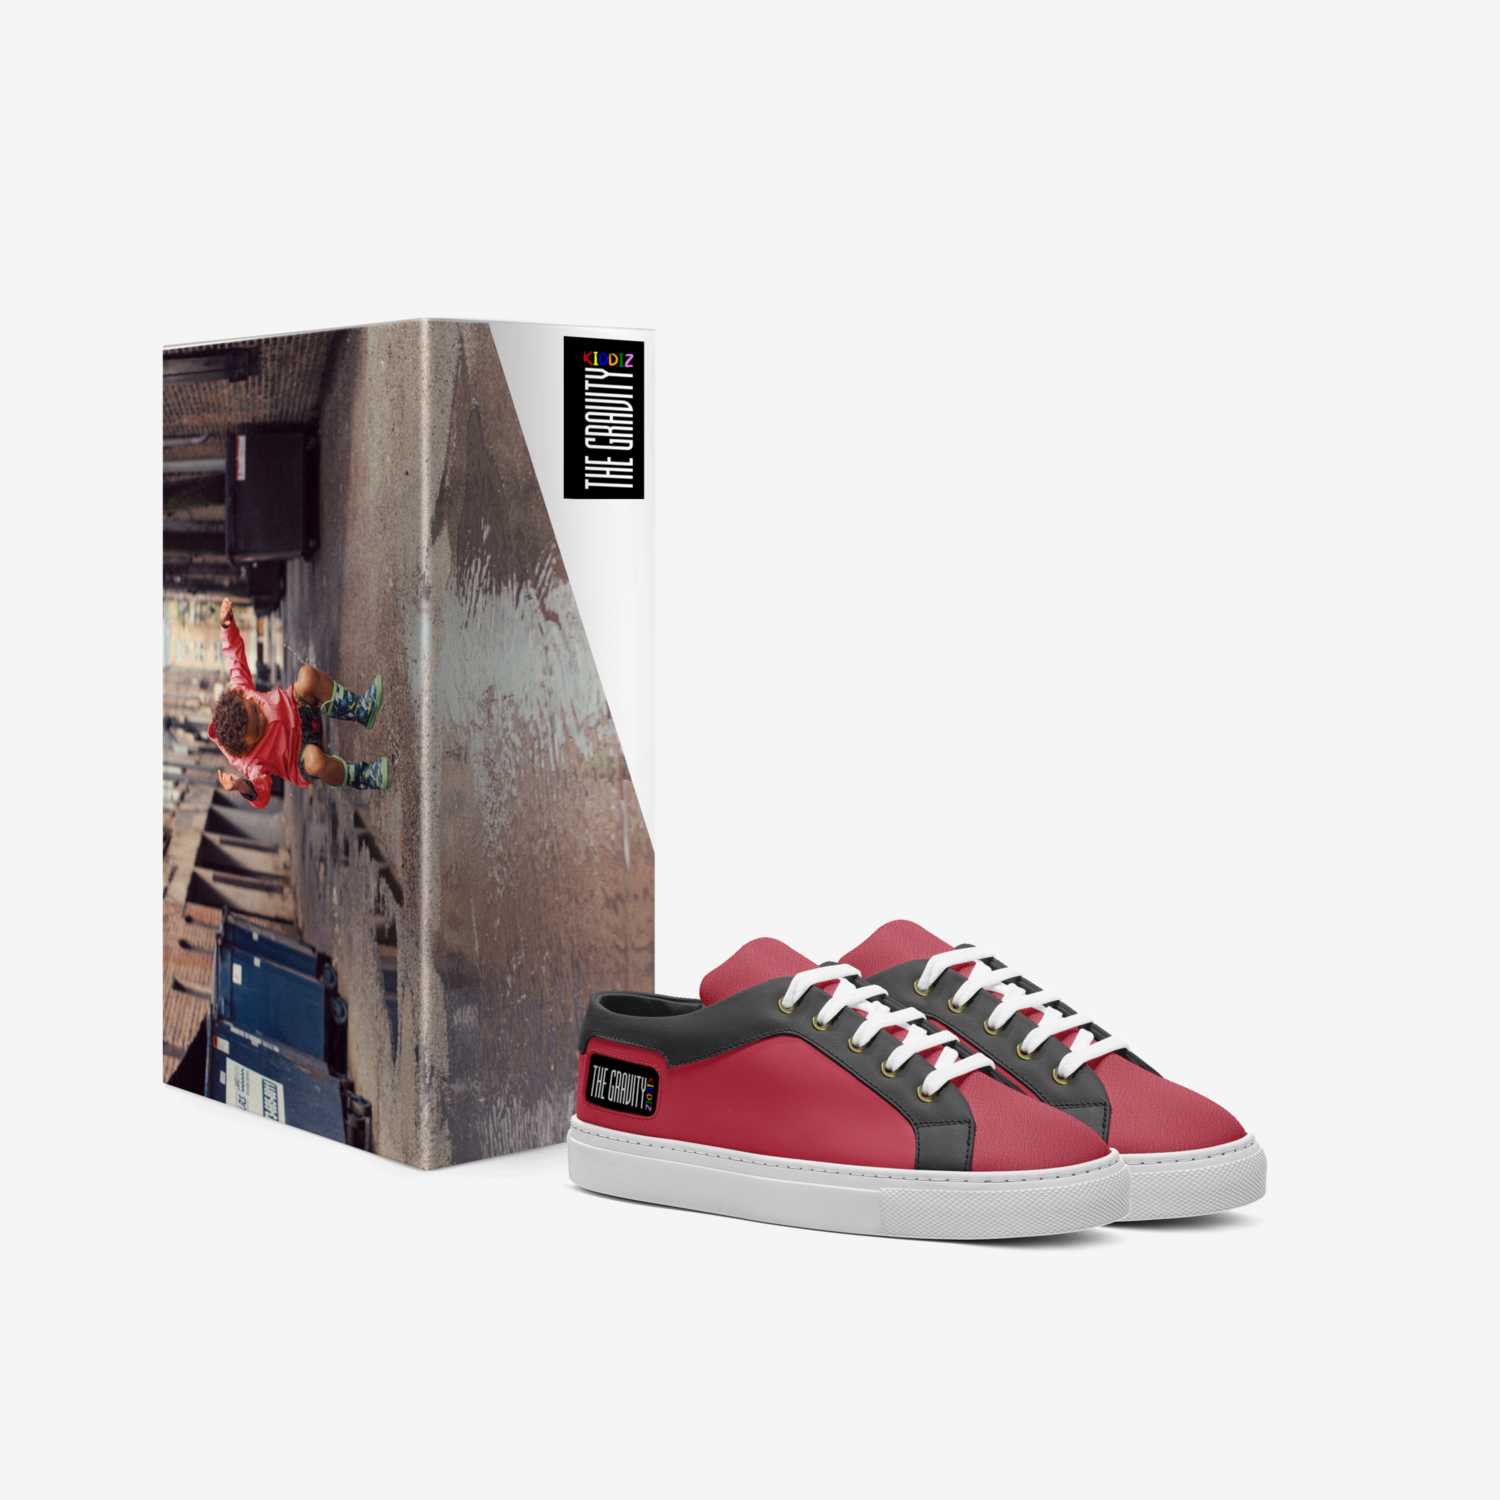 Gravity Kiddiz custom made in Italy shoes by Ita Akpan-ita | Box view